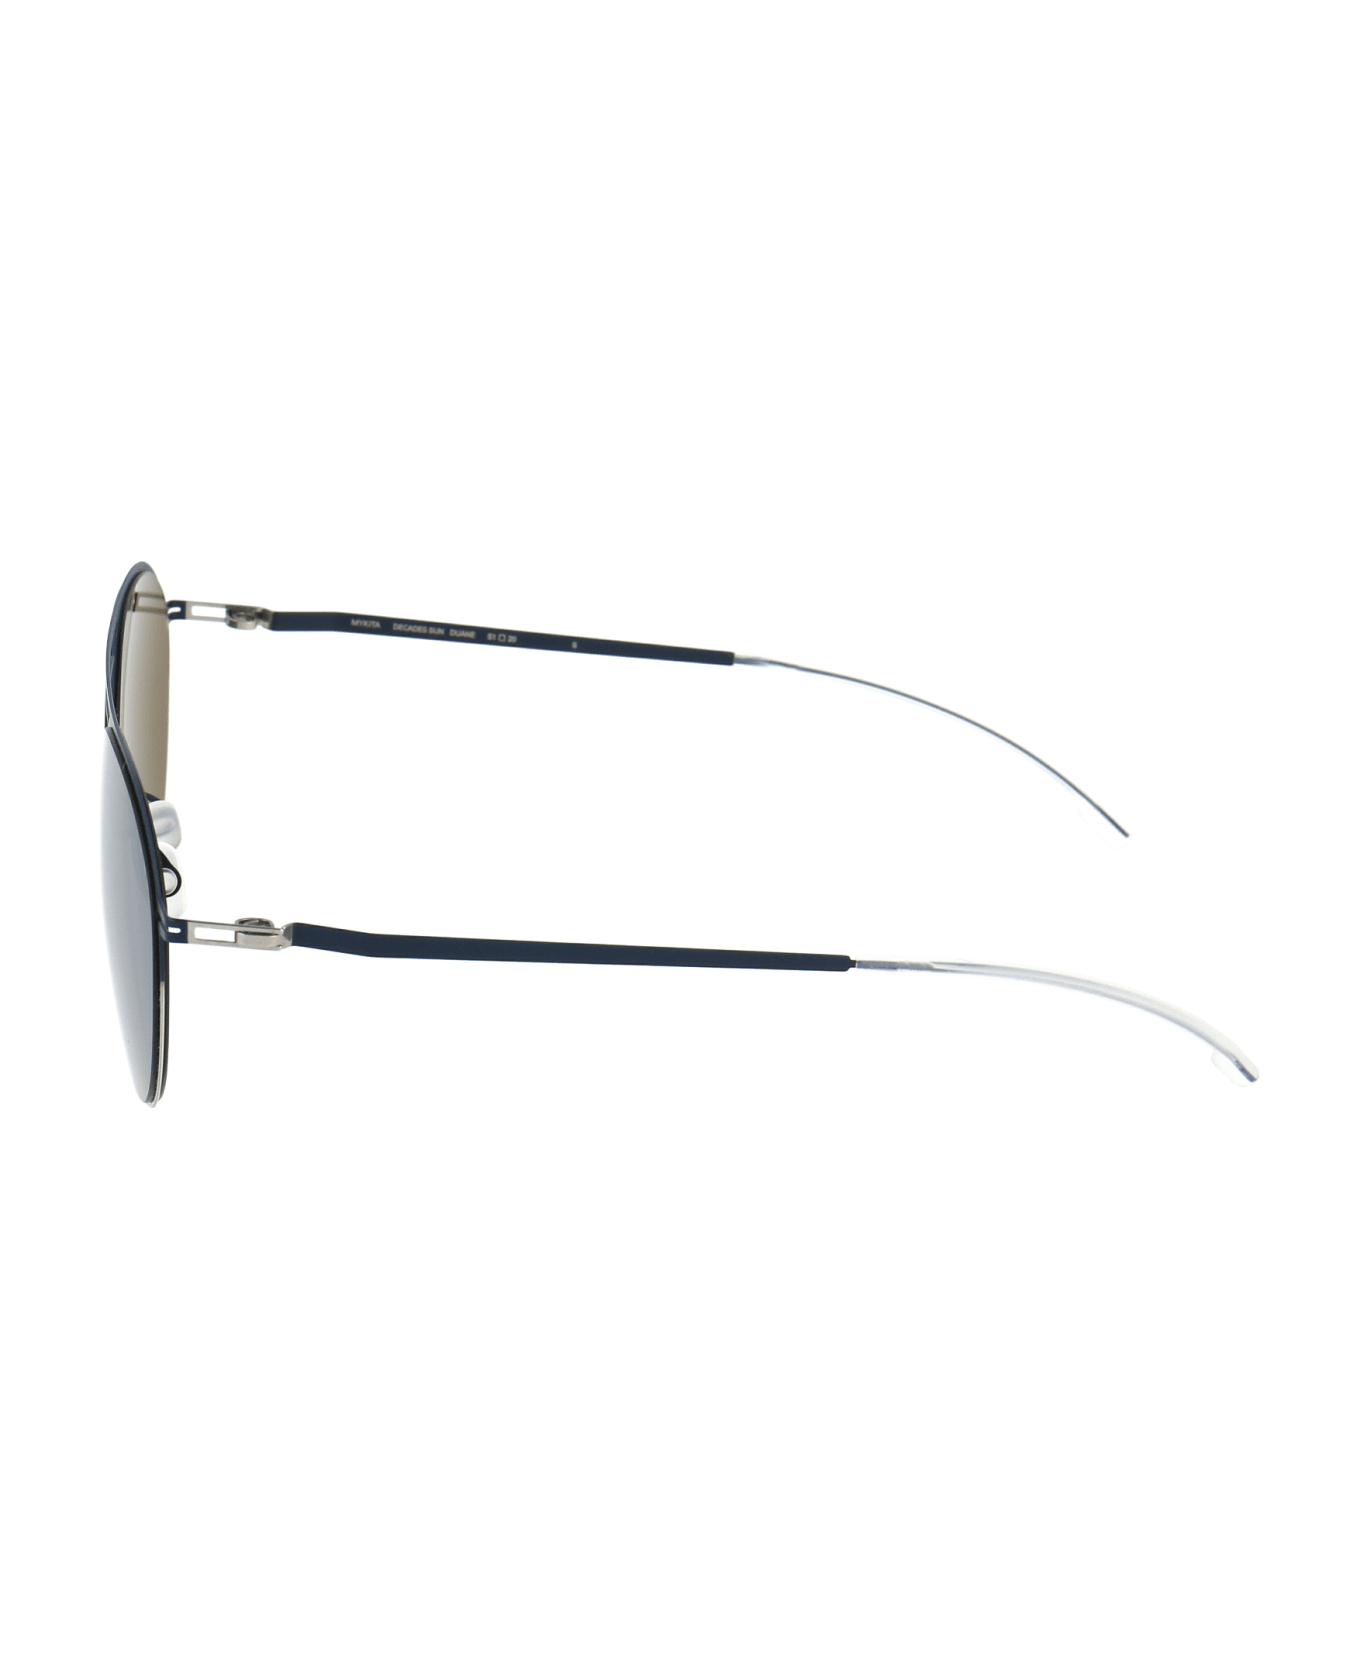 Mykita Duane Sunglasses - 091 Silver/Navy Light Silver Flash